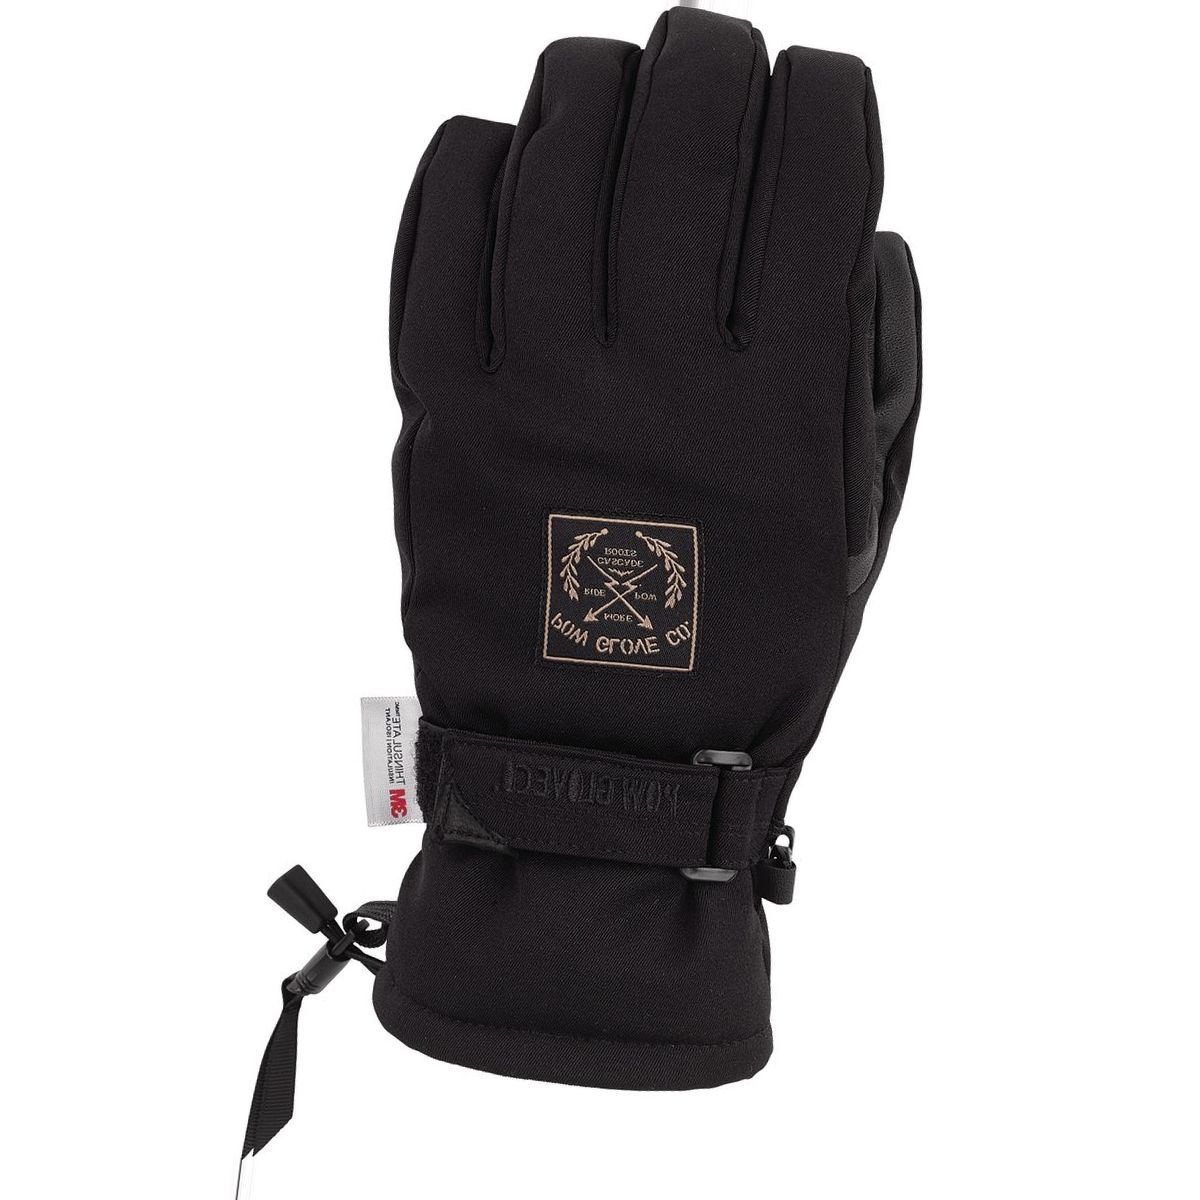 Pow Gloves XG Mid Glove - Men's